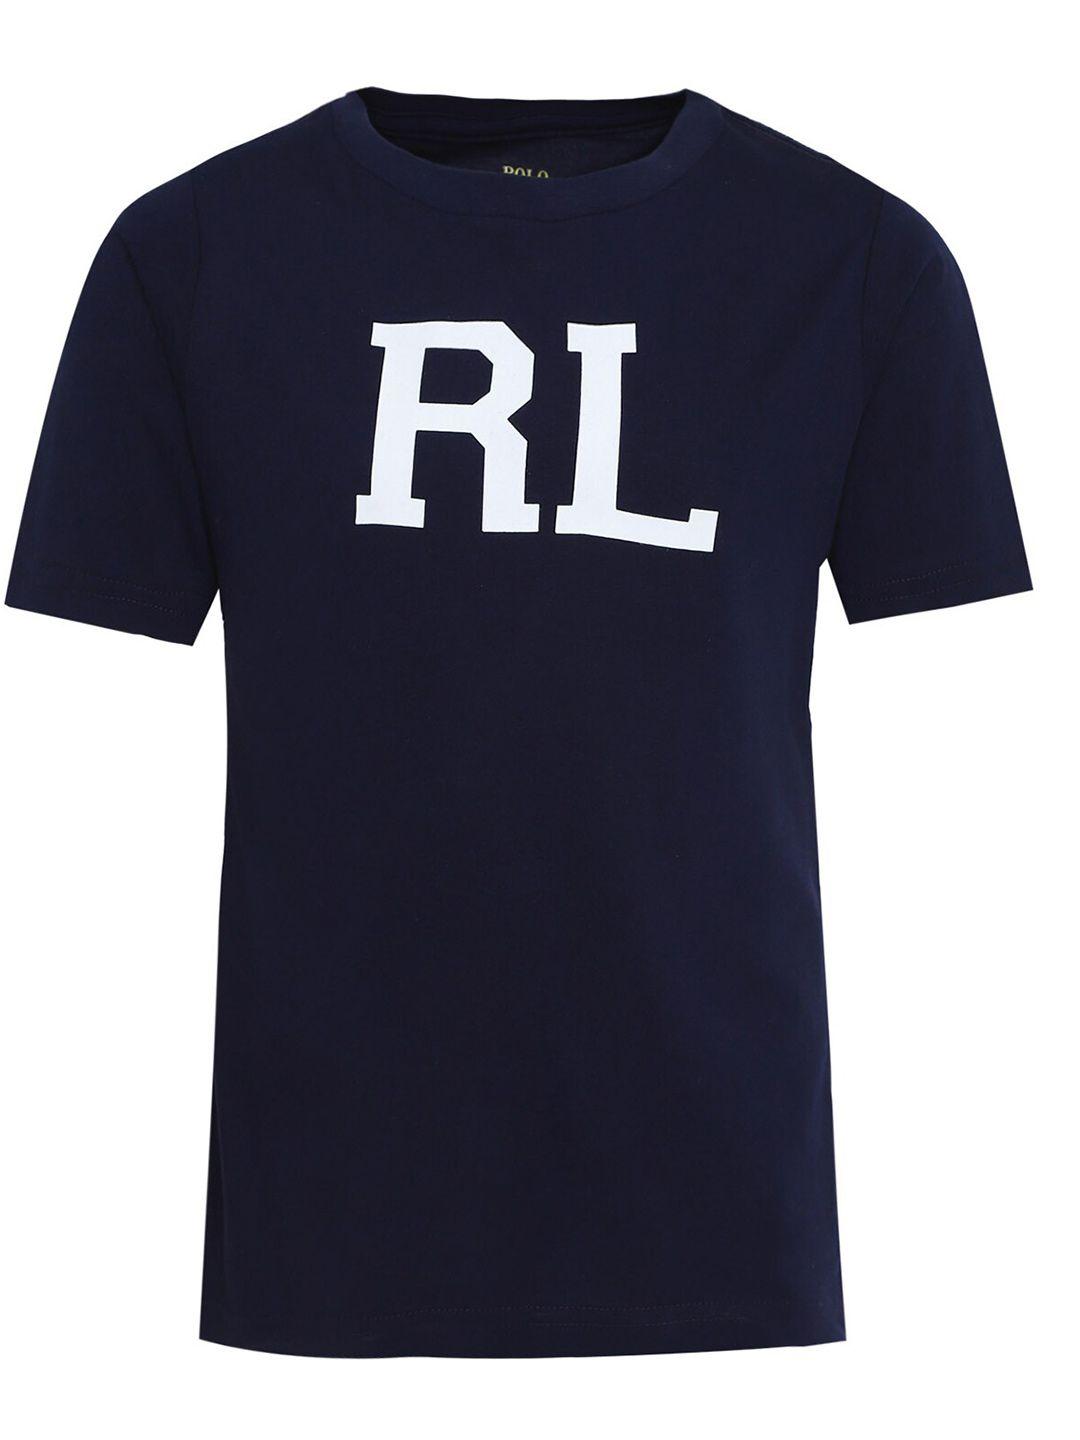 polo ralph lauren boys typography printed pure cotton t-shirt